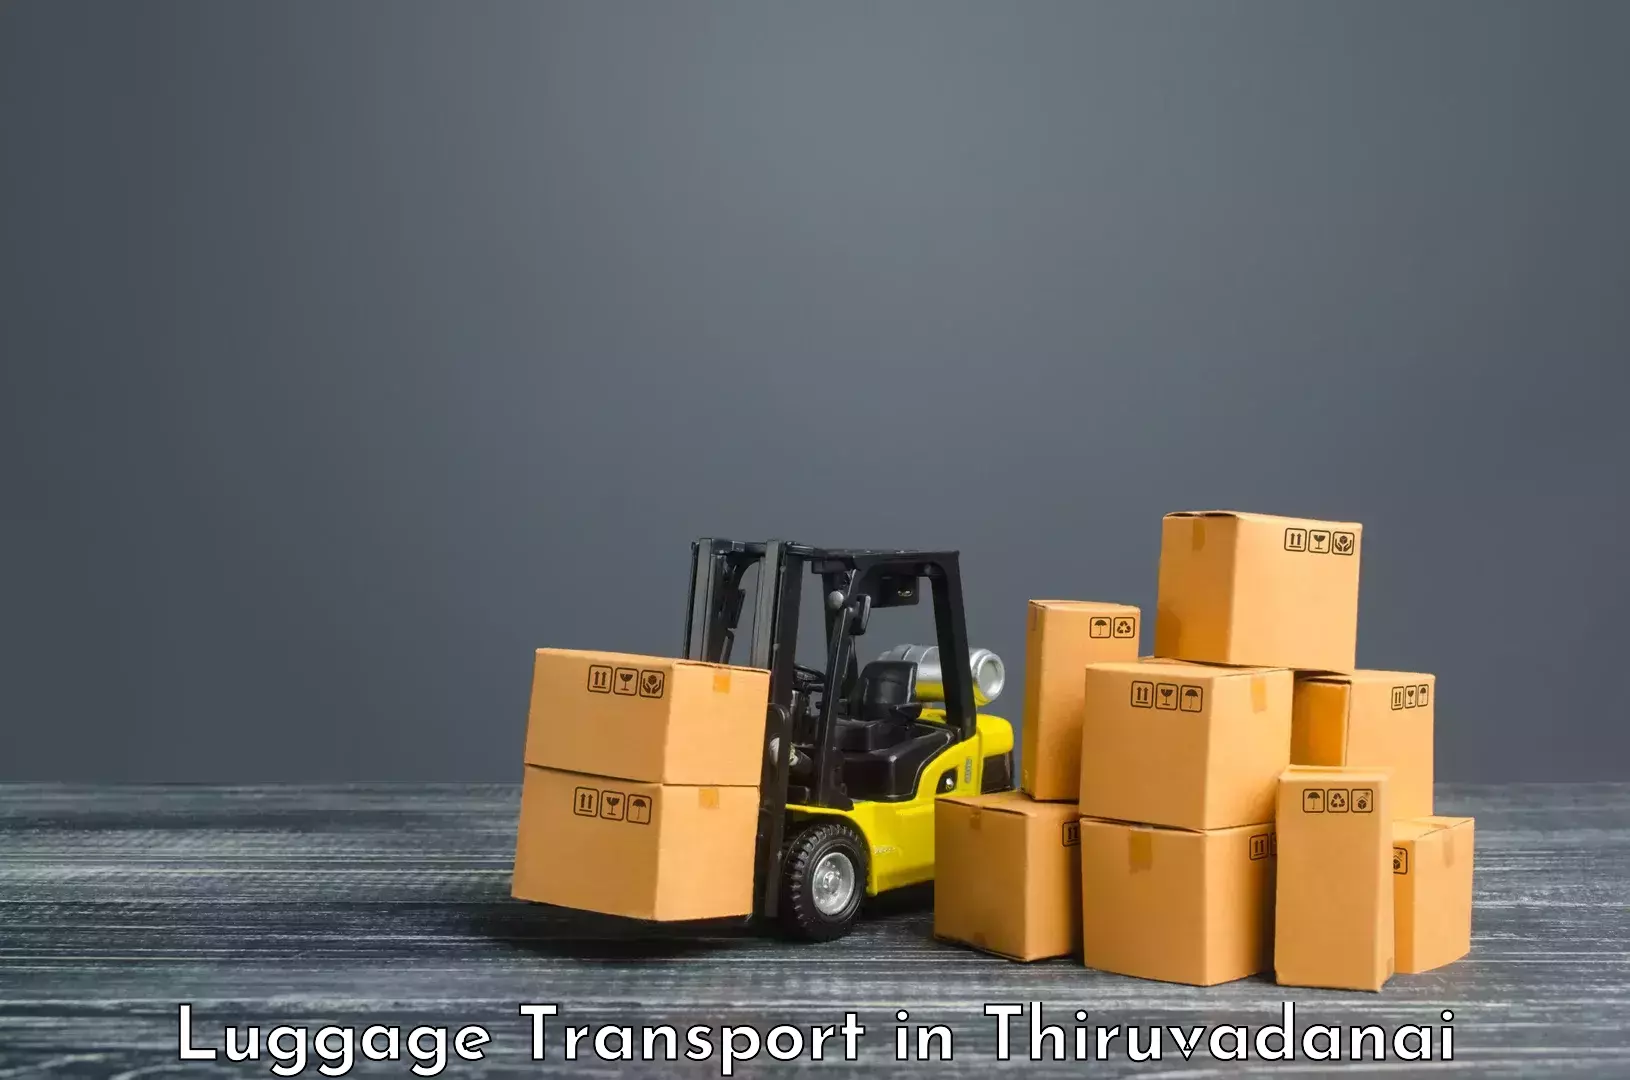 Automated luggage transport in Thiruvadanai